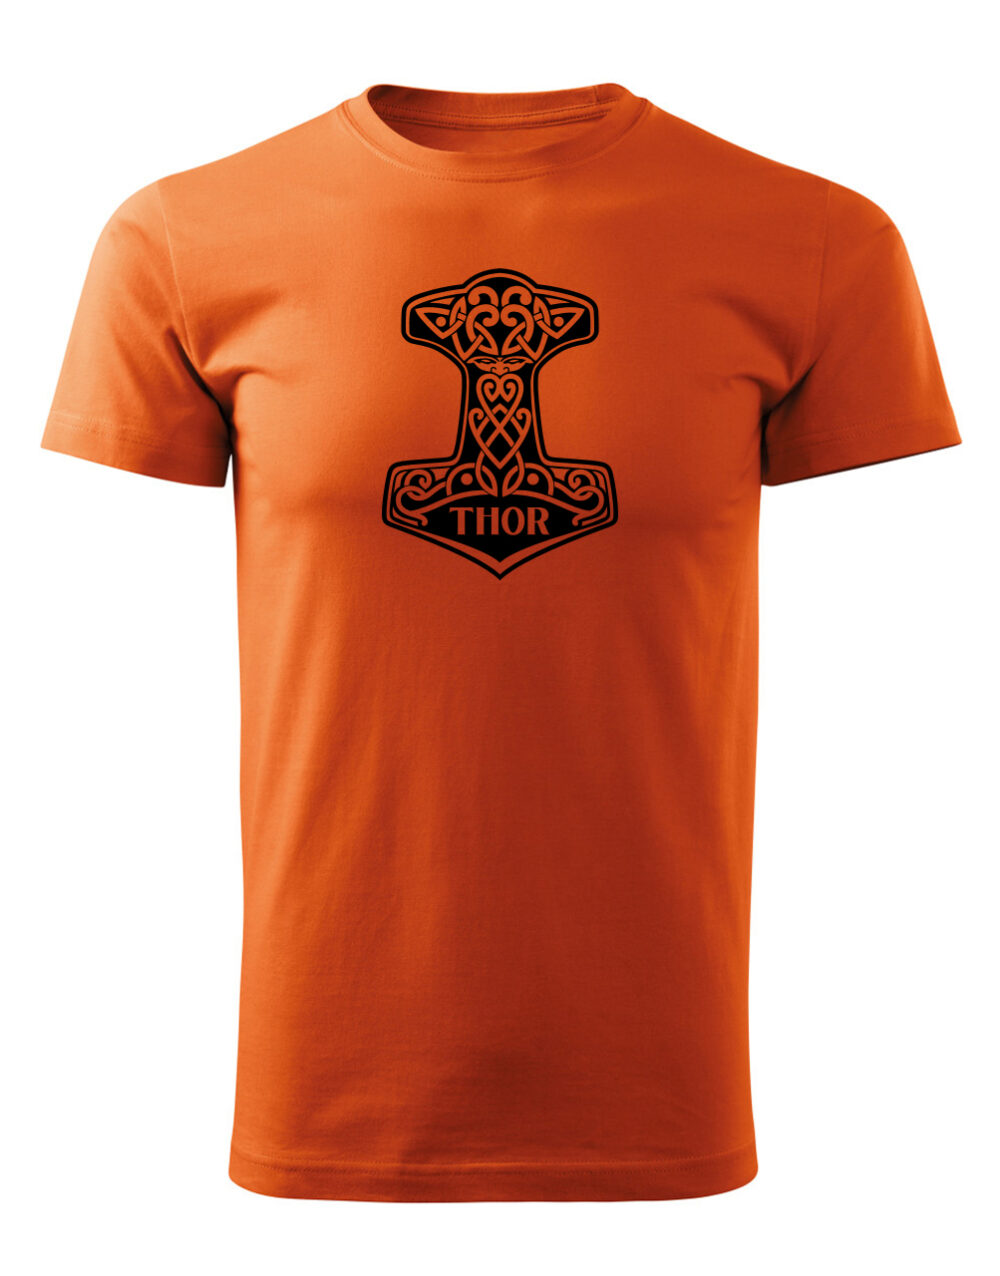 Pánské tričko s potiskem Thorovo kladivo oranžová